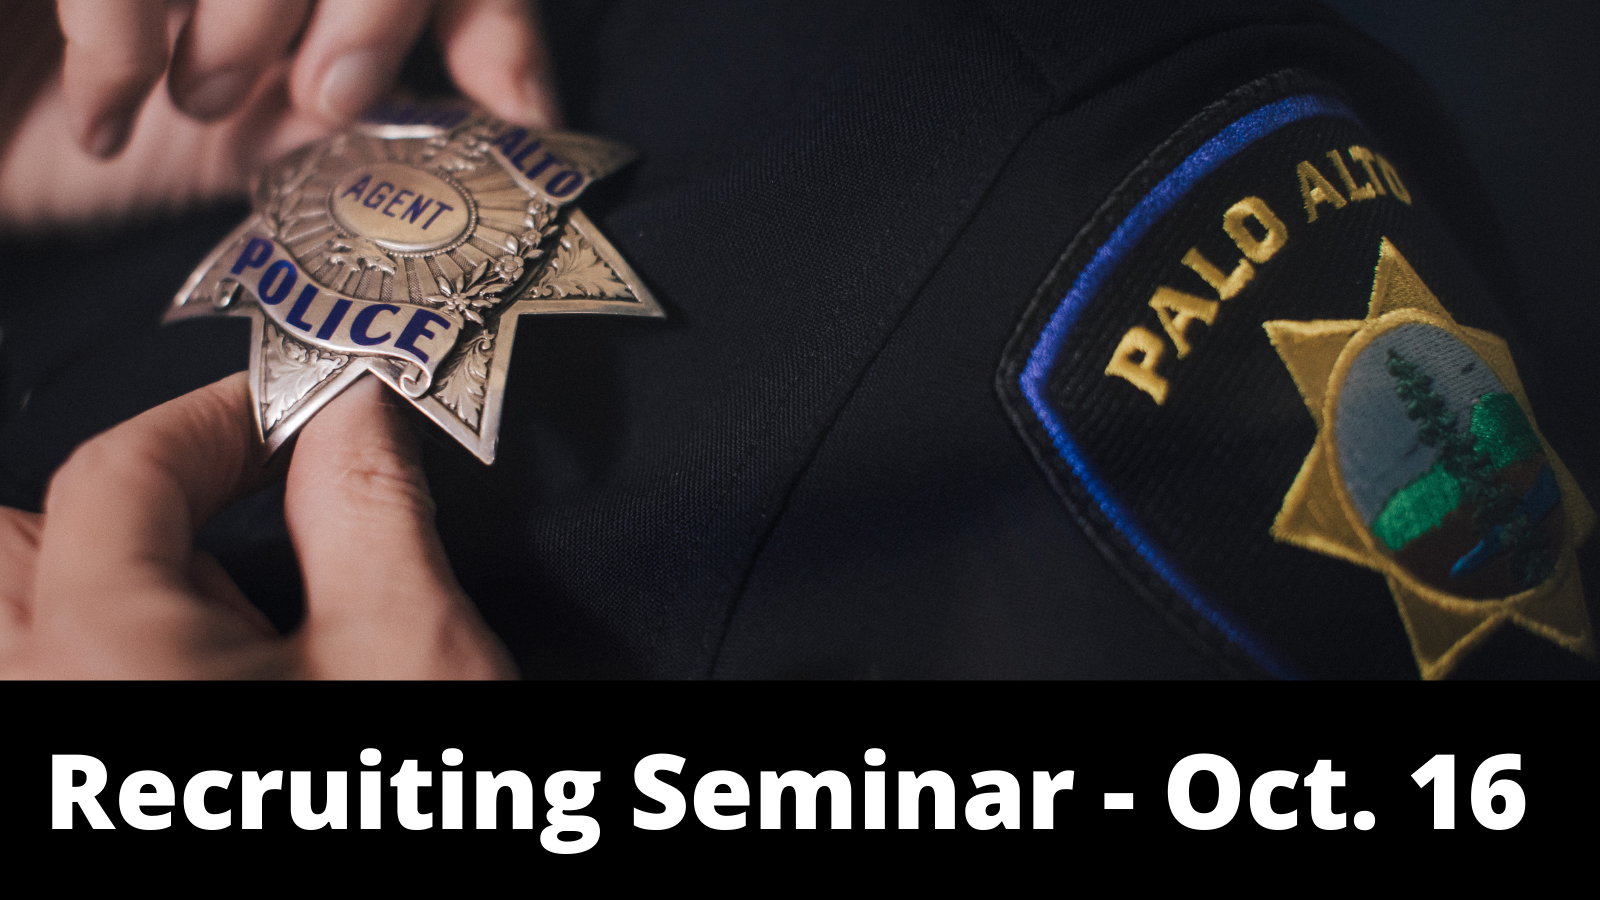 Police Hosting Recruiting Seminar on October 16 City of Palo Alto, CA